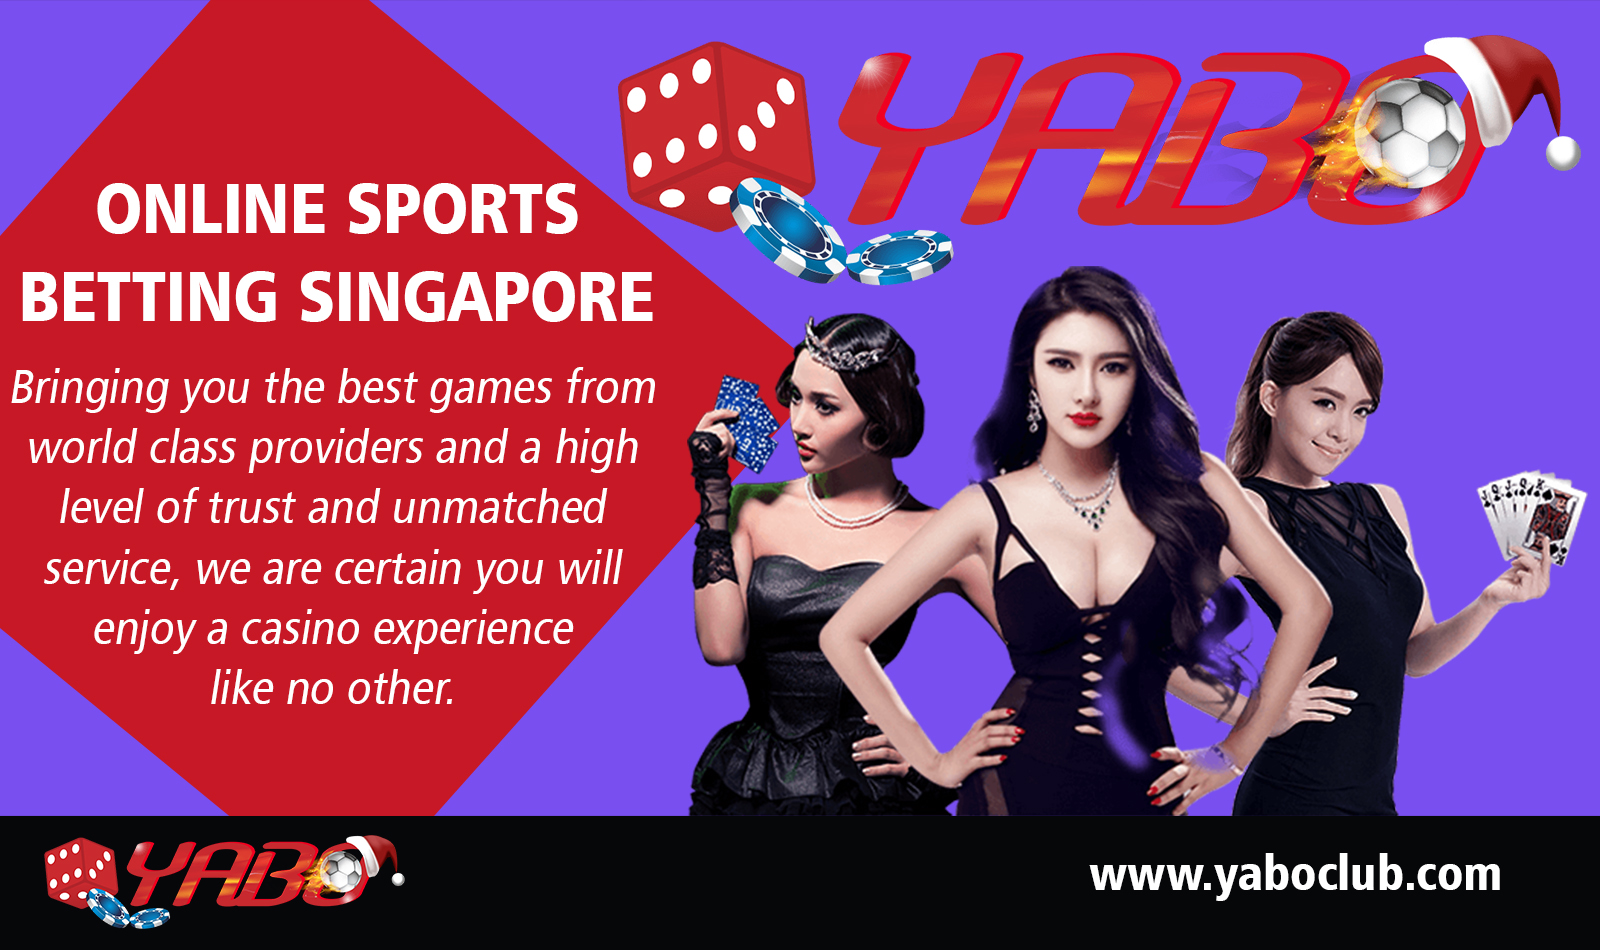 vbulletin online casino singapore